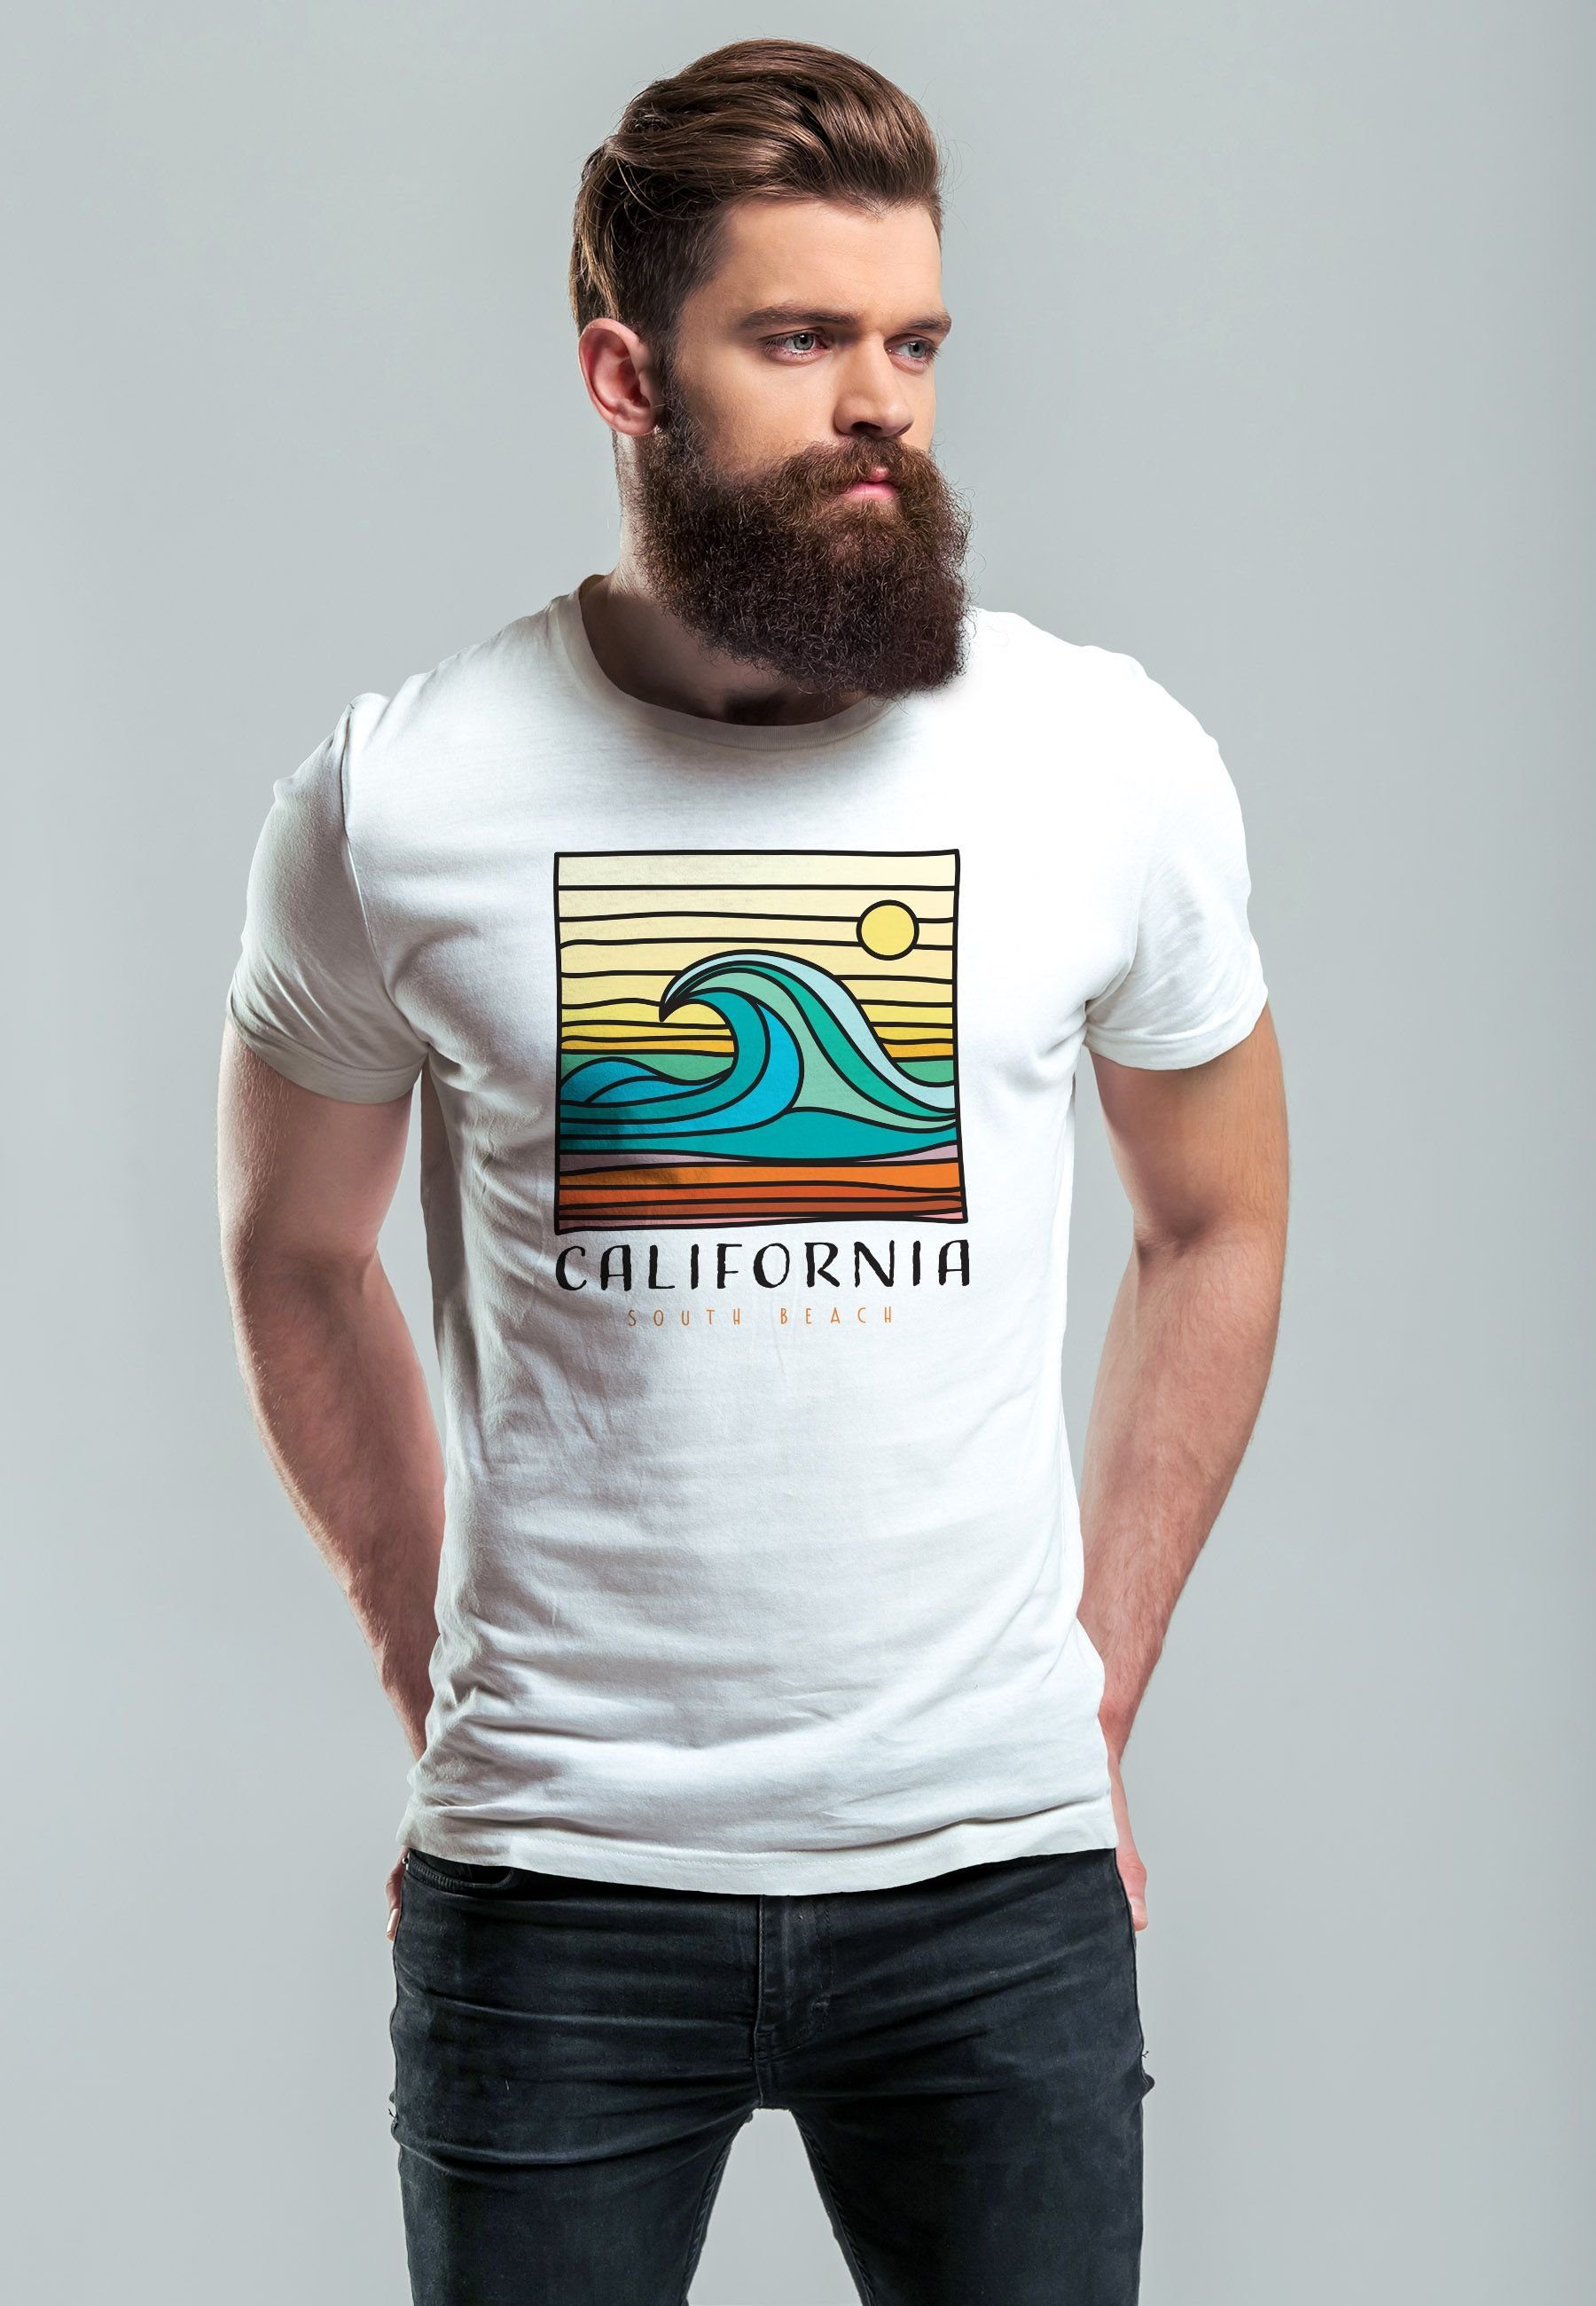 Neverless Wave mit T-Shirt Beach Print Surfing Print Aufdruc Herren South Print-Shirt weiß Welle California